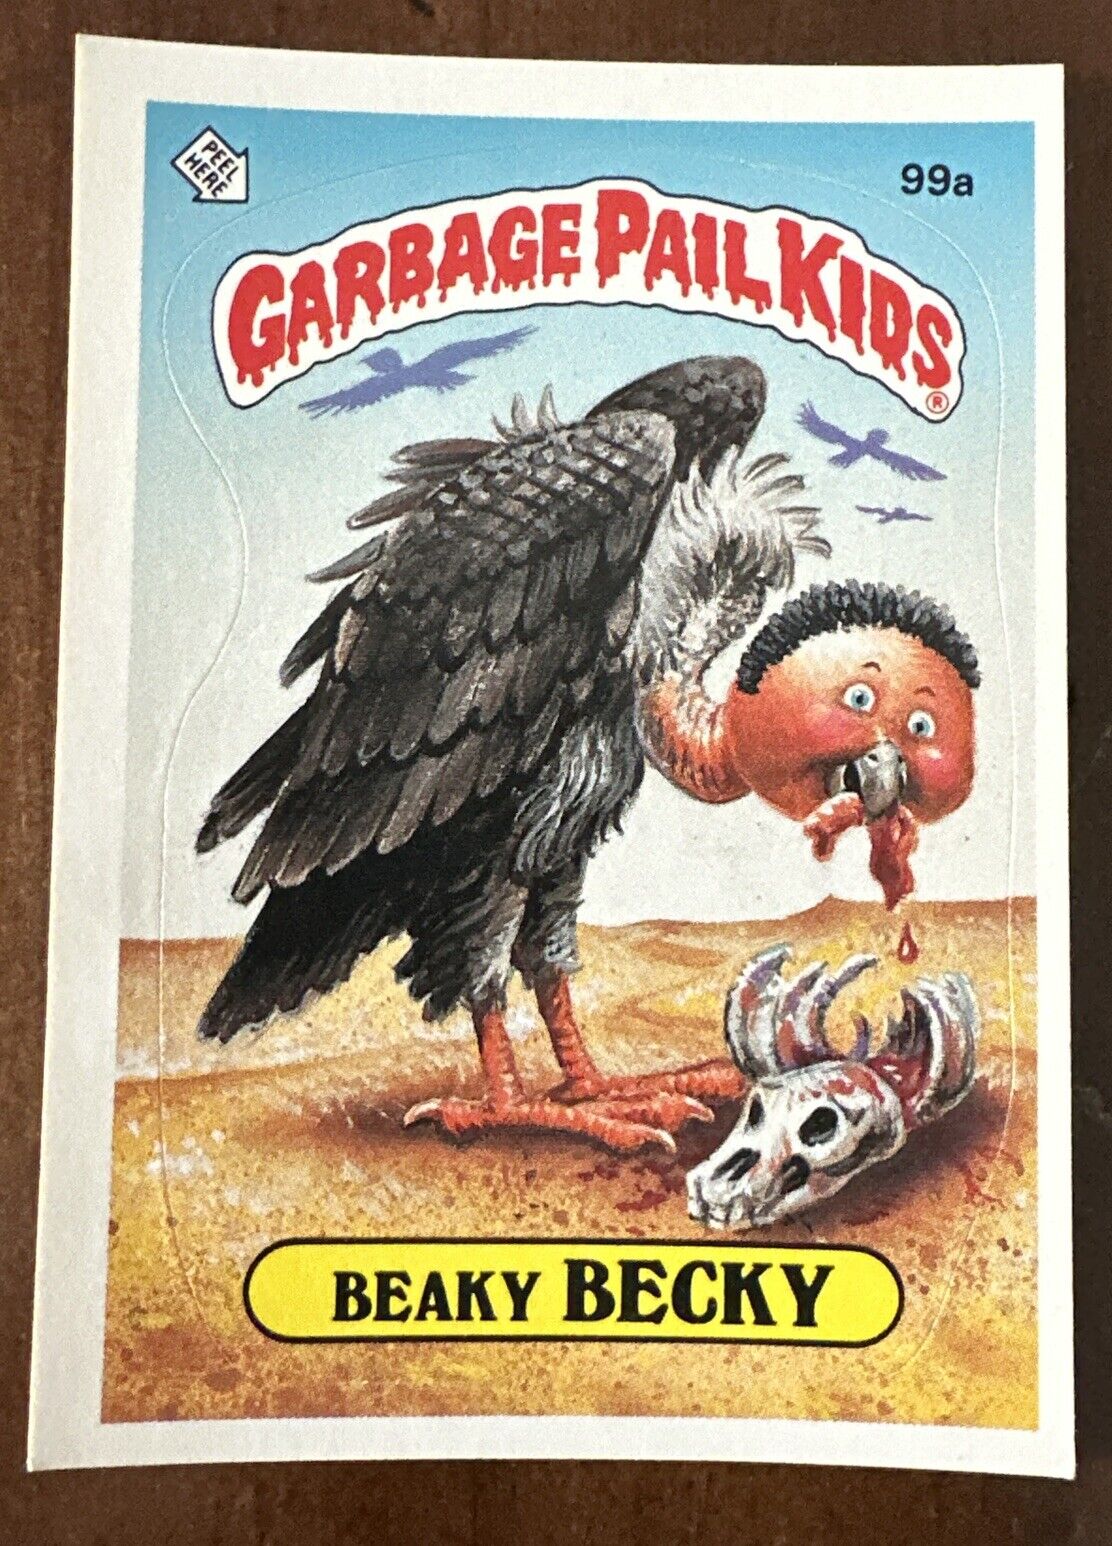 1986 Topps Garbage Pail Kids Original 3rd Series Card #99a BEAKY BECKY Vintage